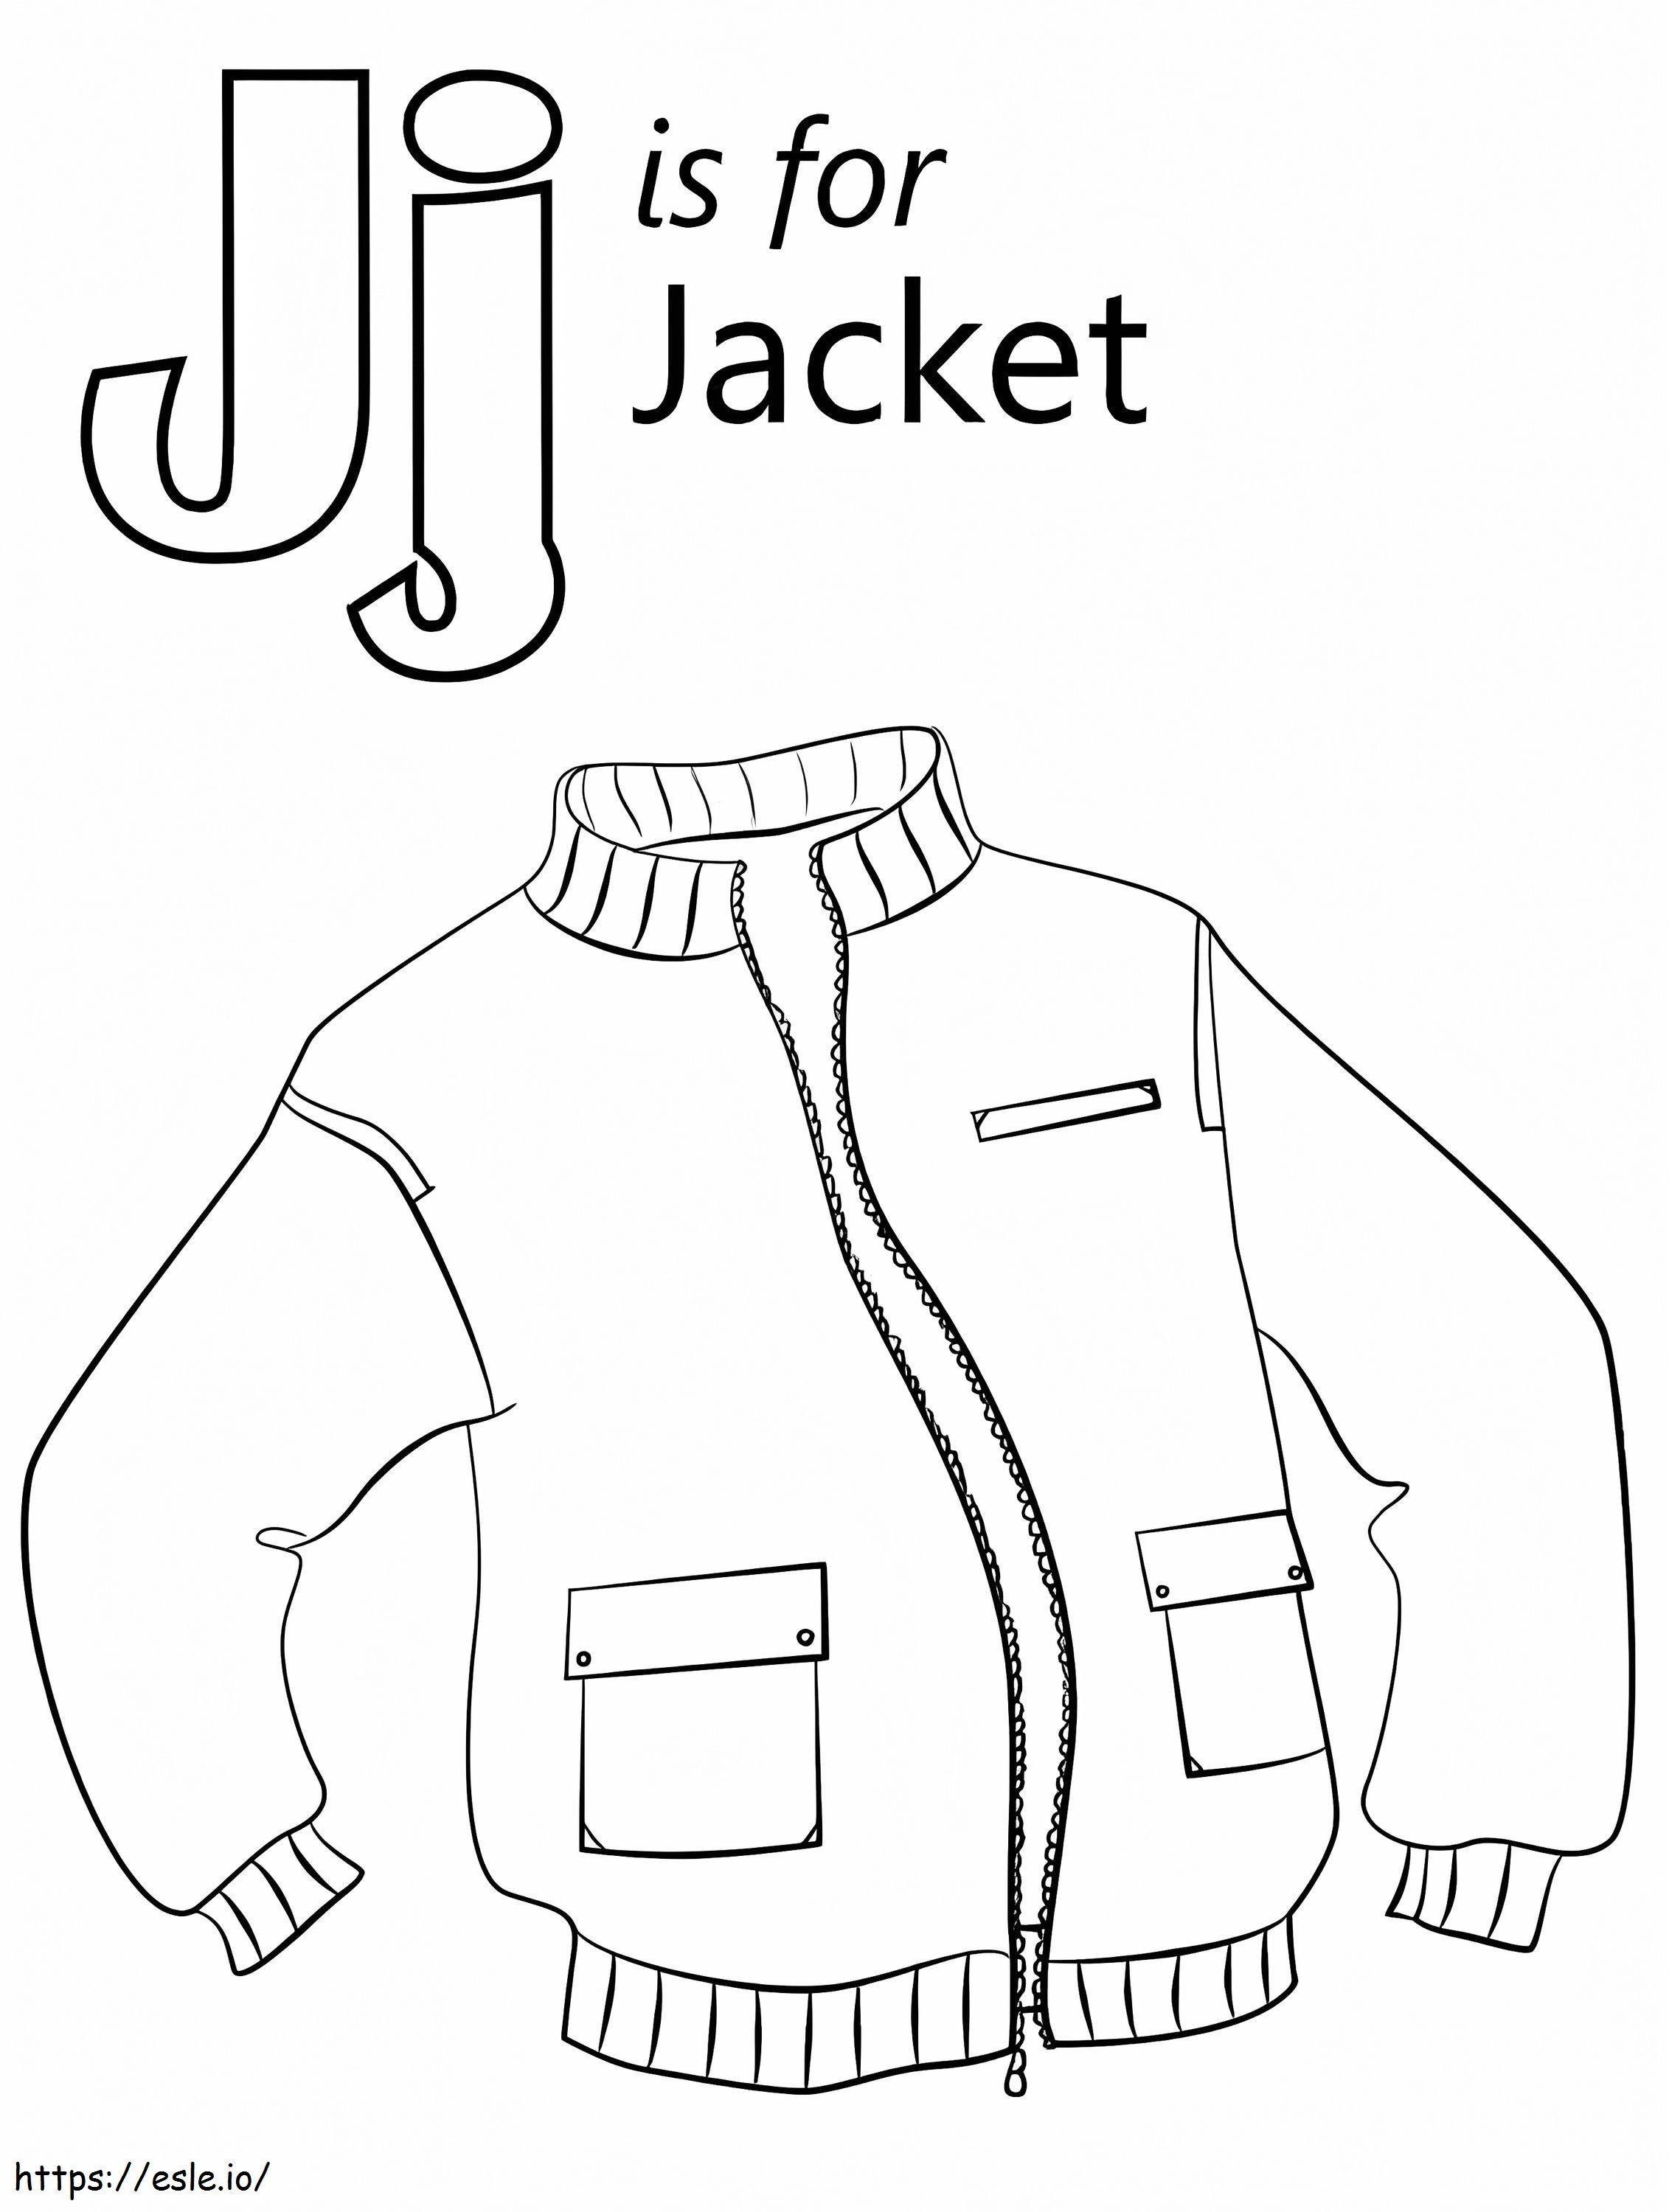 Letter J Jacket coloring page